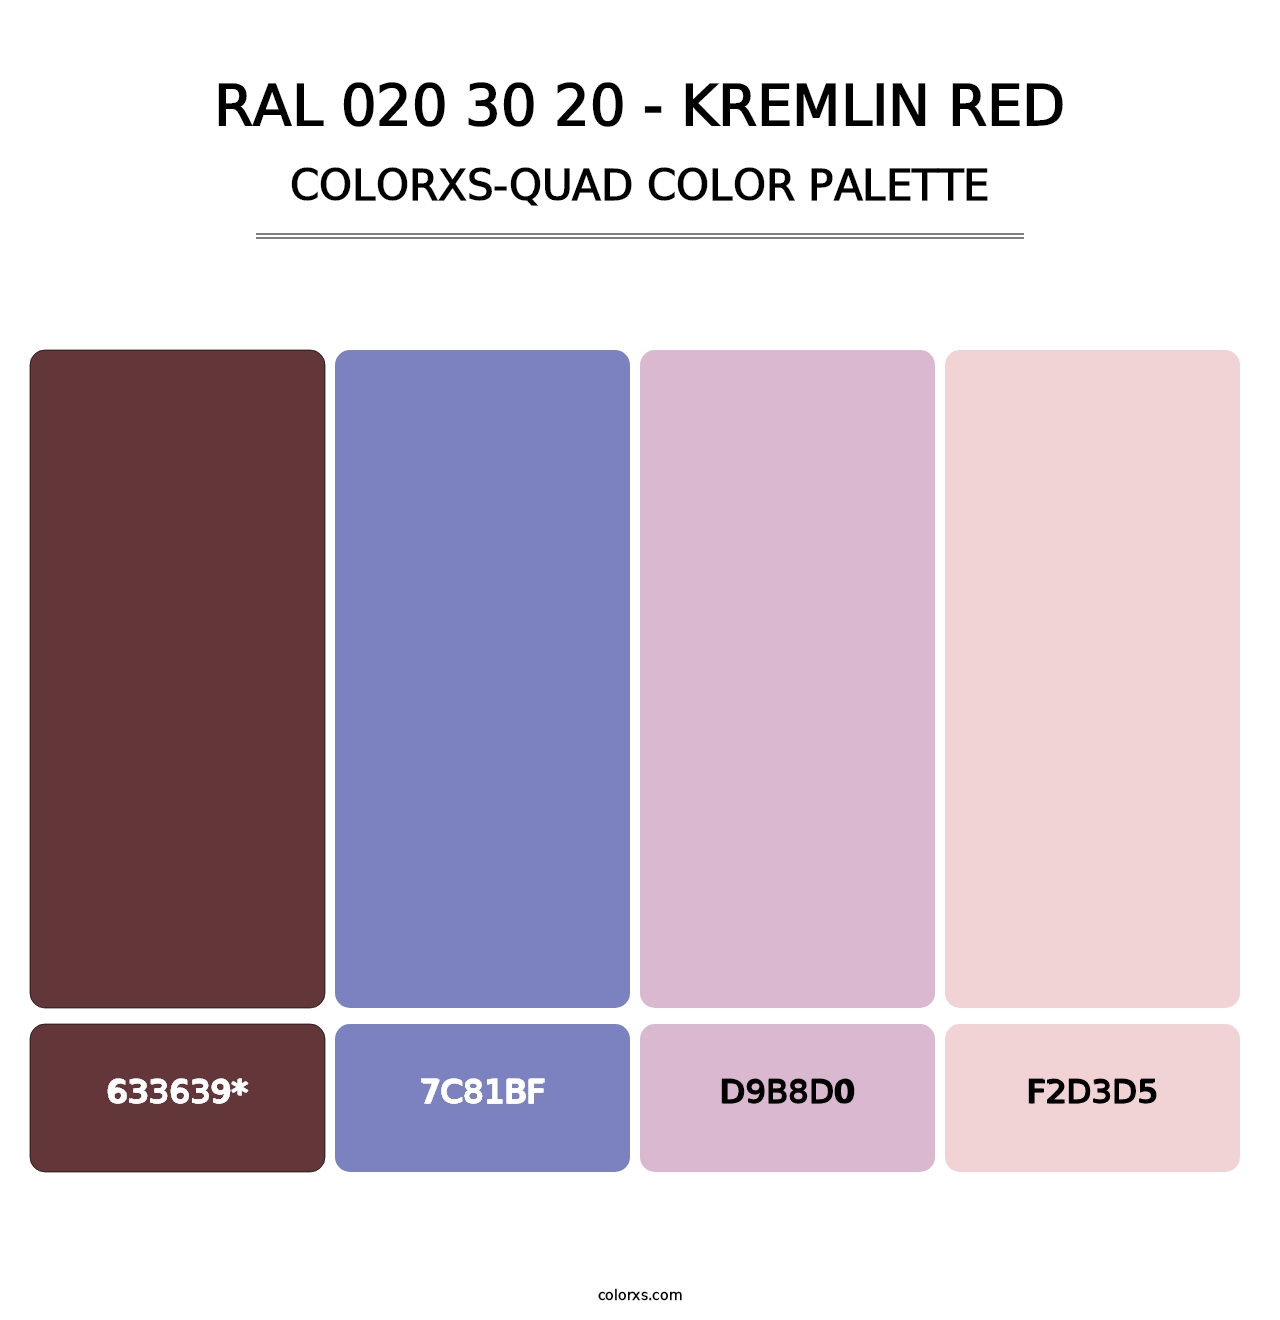 RAL 020 30 20 - Kremlin Red - Colorxs Quad Palette